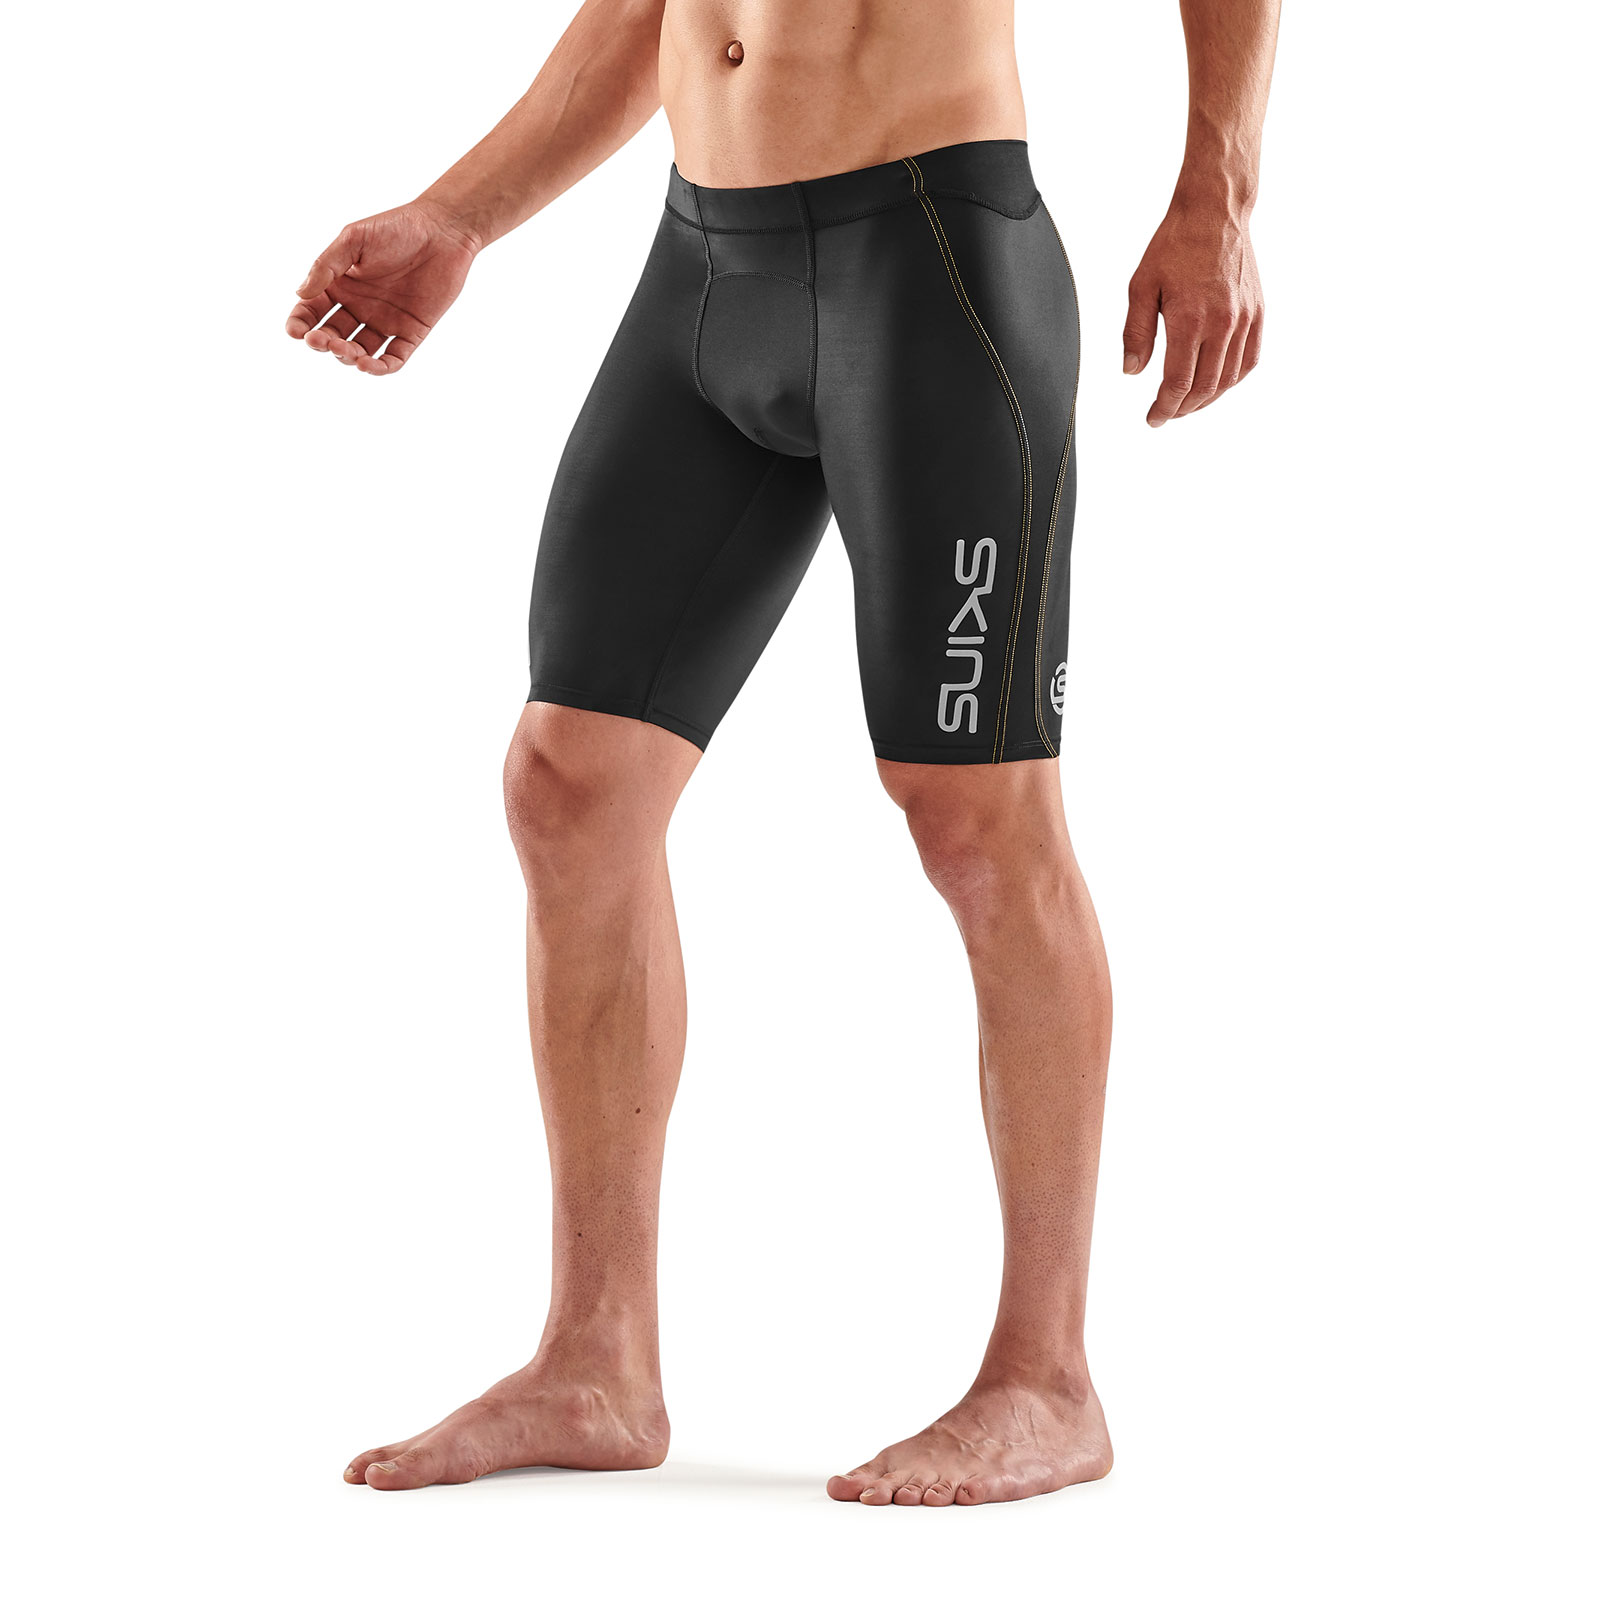 Nylon Compression Shorts and Half Tights For Men (BLACK/YELLOW)